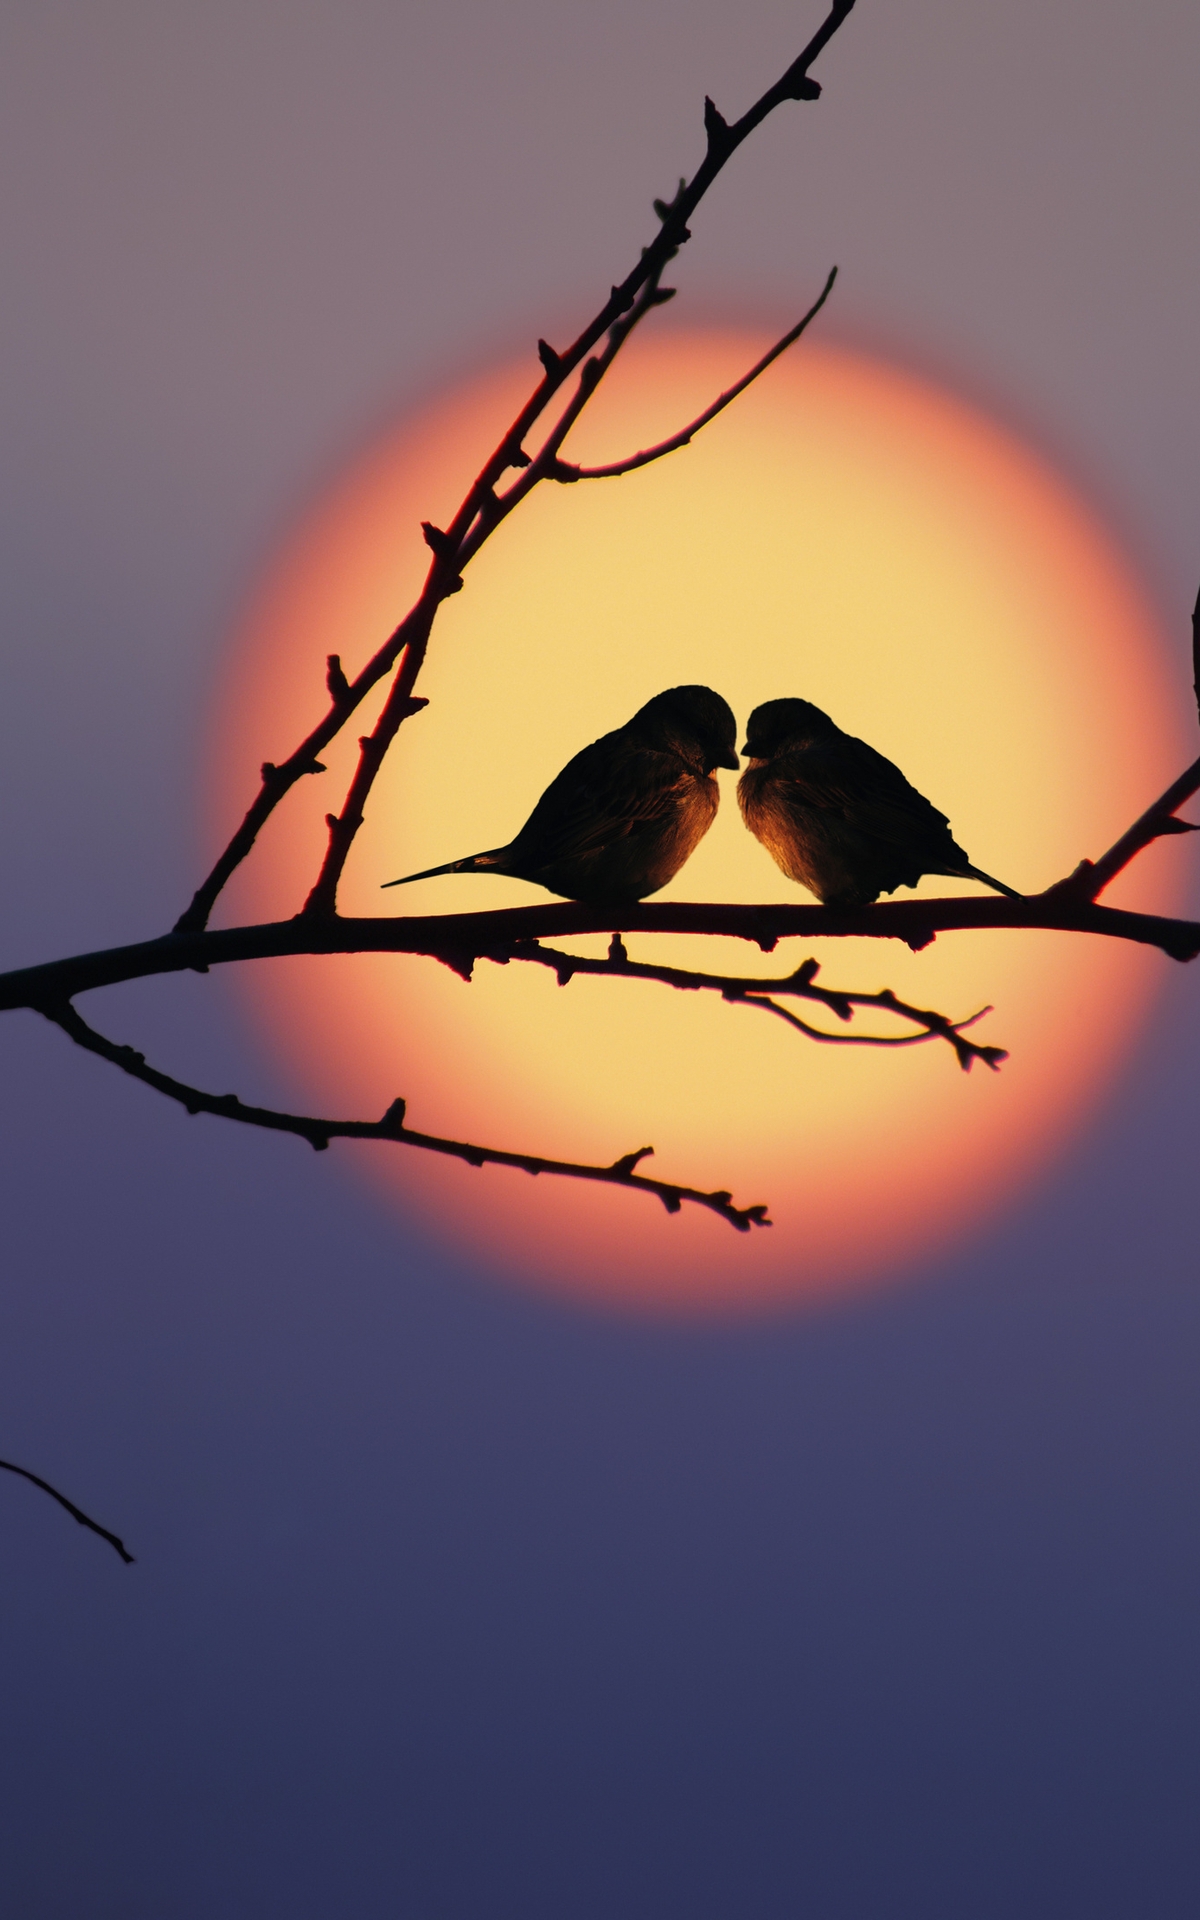 Картинка: Птицы, пара, на ветке, закат, вечер, солнце